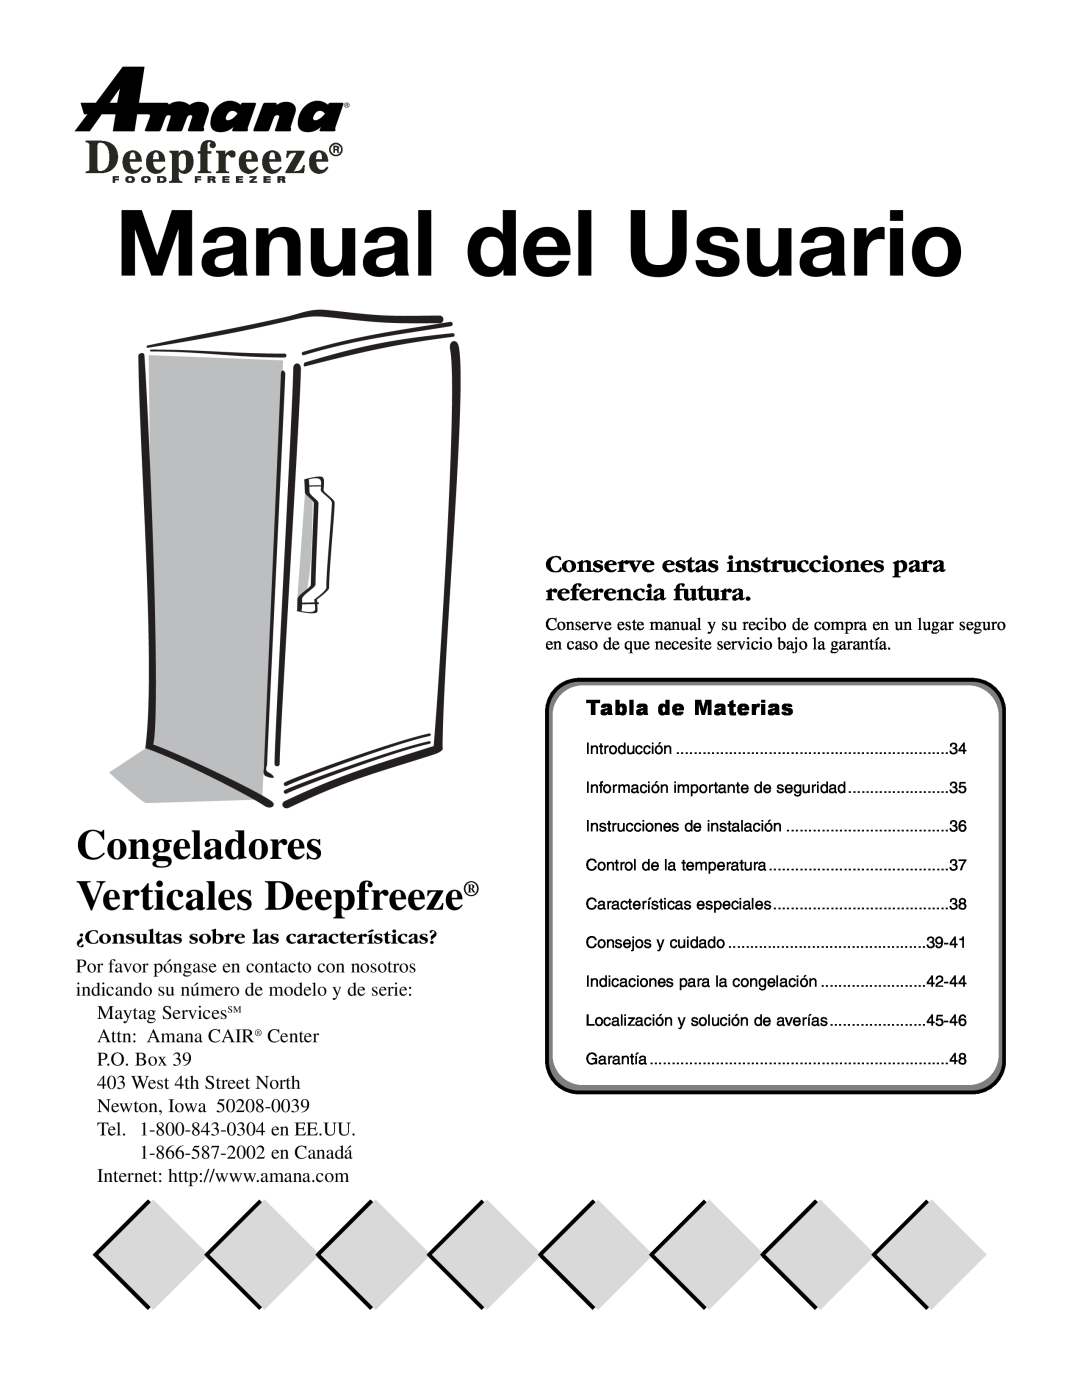 Amana 1-82034-002 owner manual Manual del Usuario, Congeladores, Verticales Deepfreeze, Tabla de Materias 